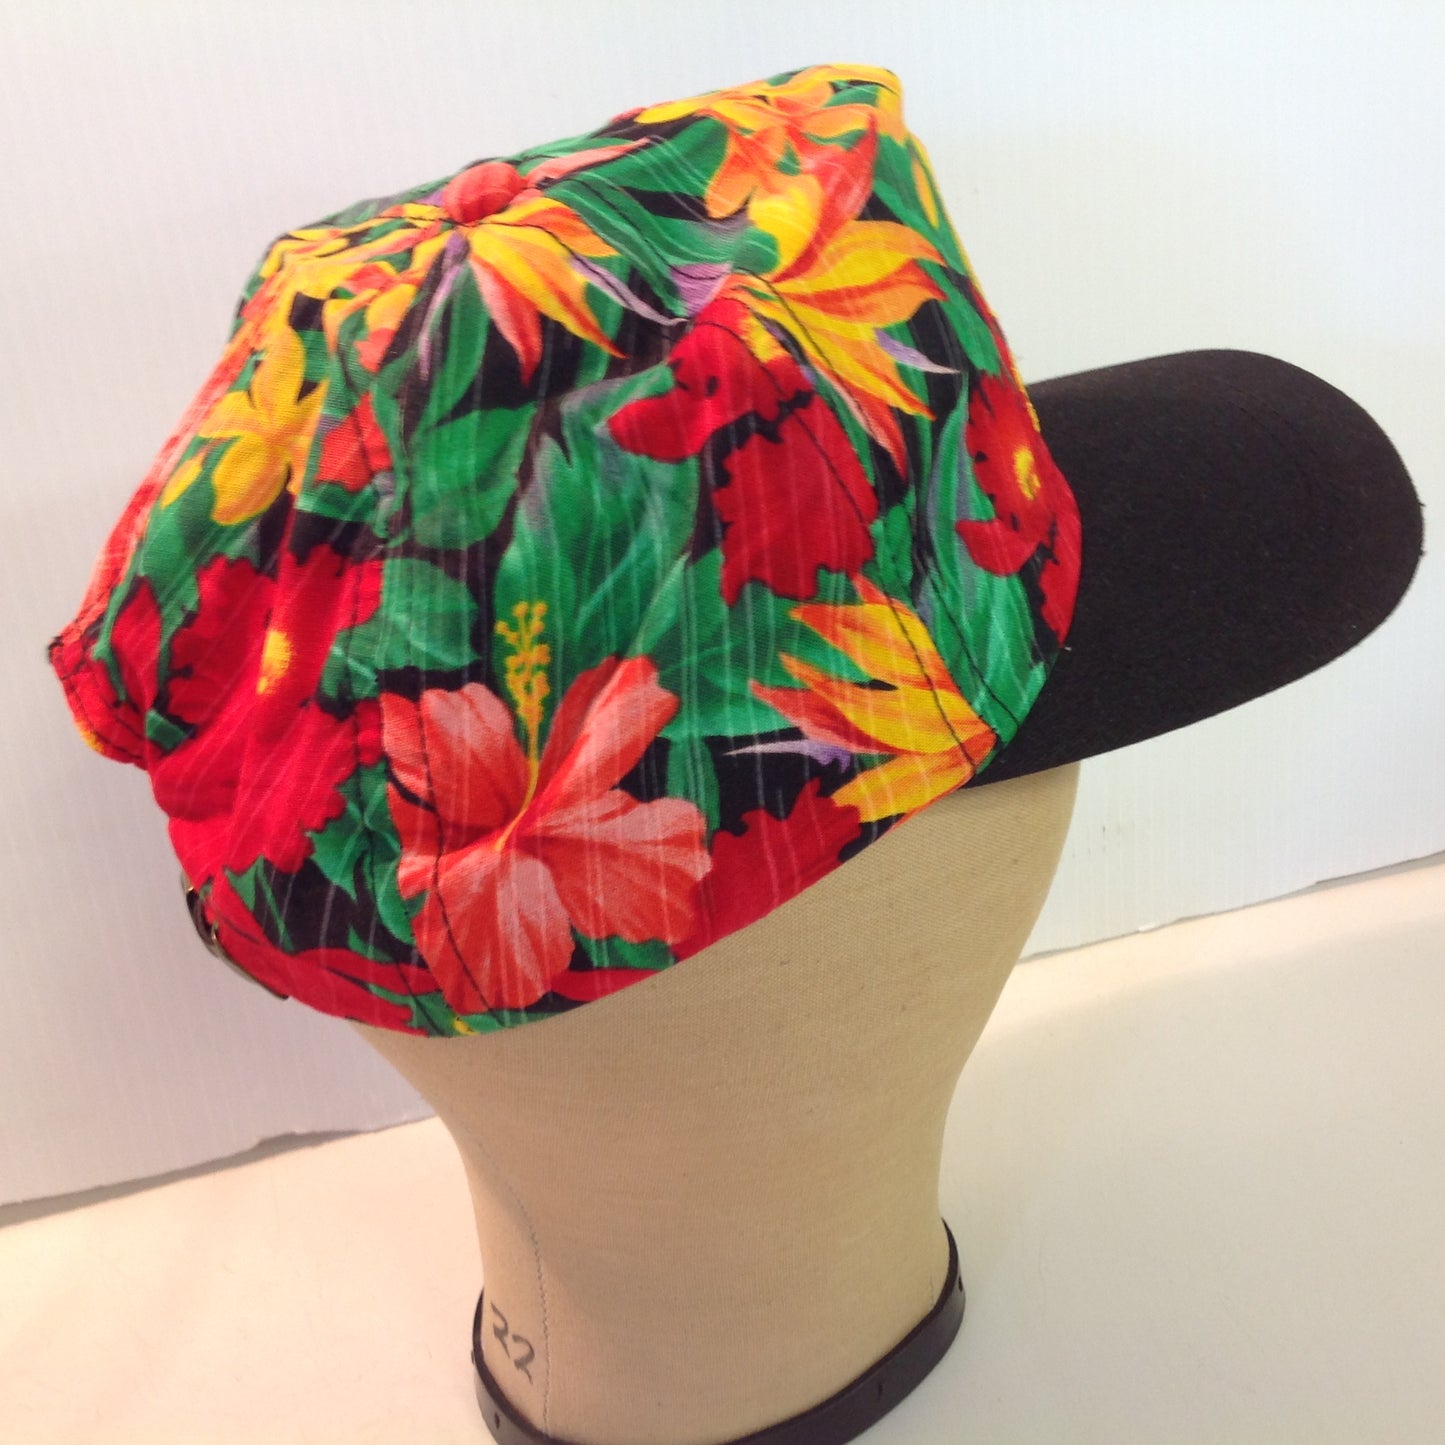 Vintage Imperial Headwear Hawailkai Golf Course Tournament Souvenir Floral Baseball Cap